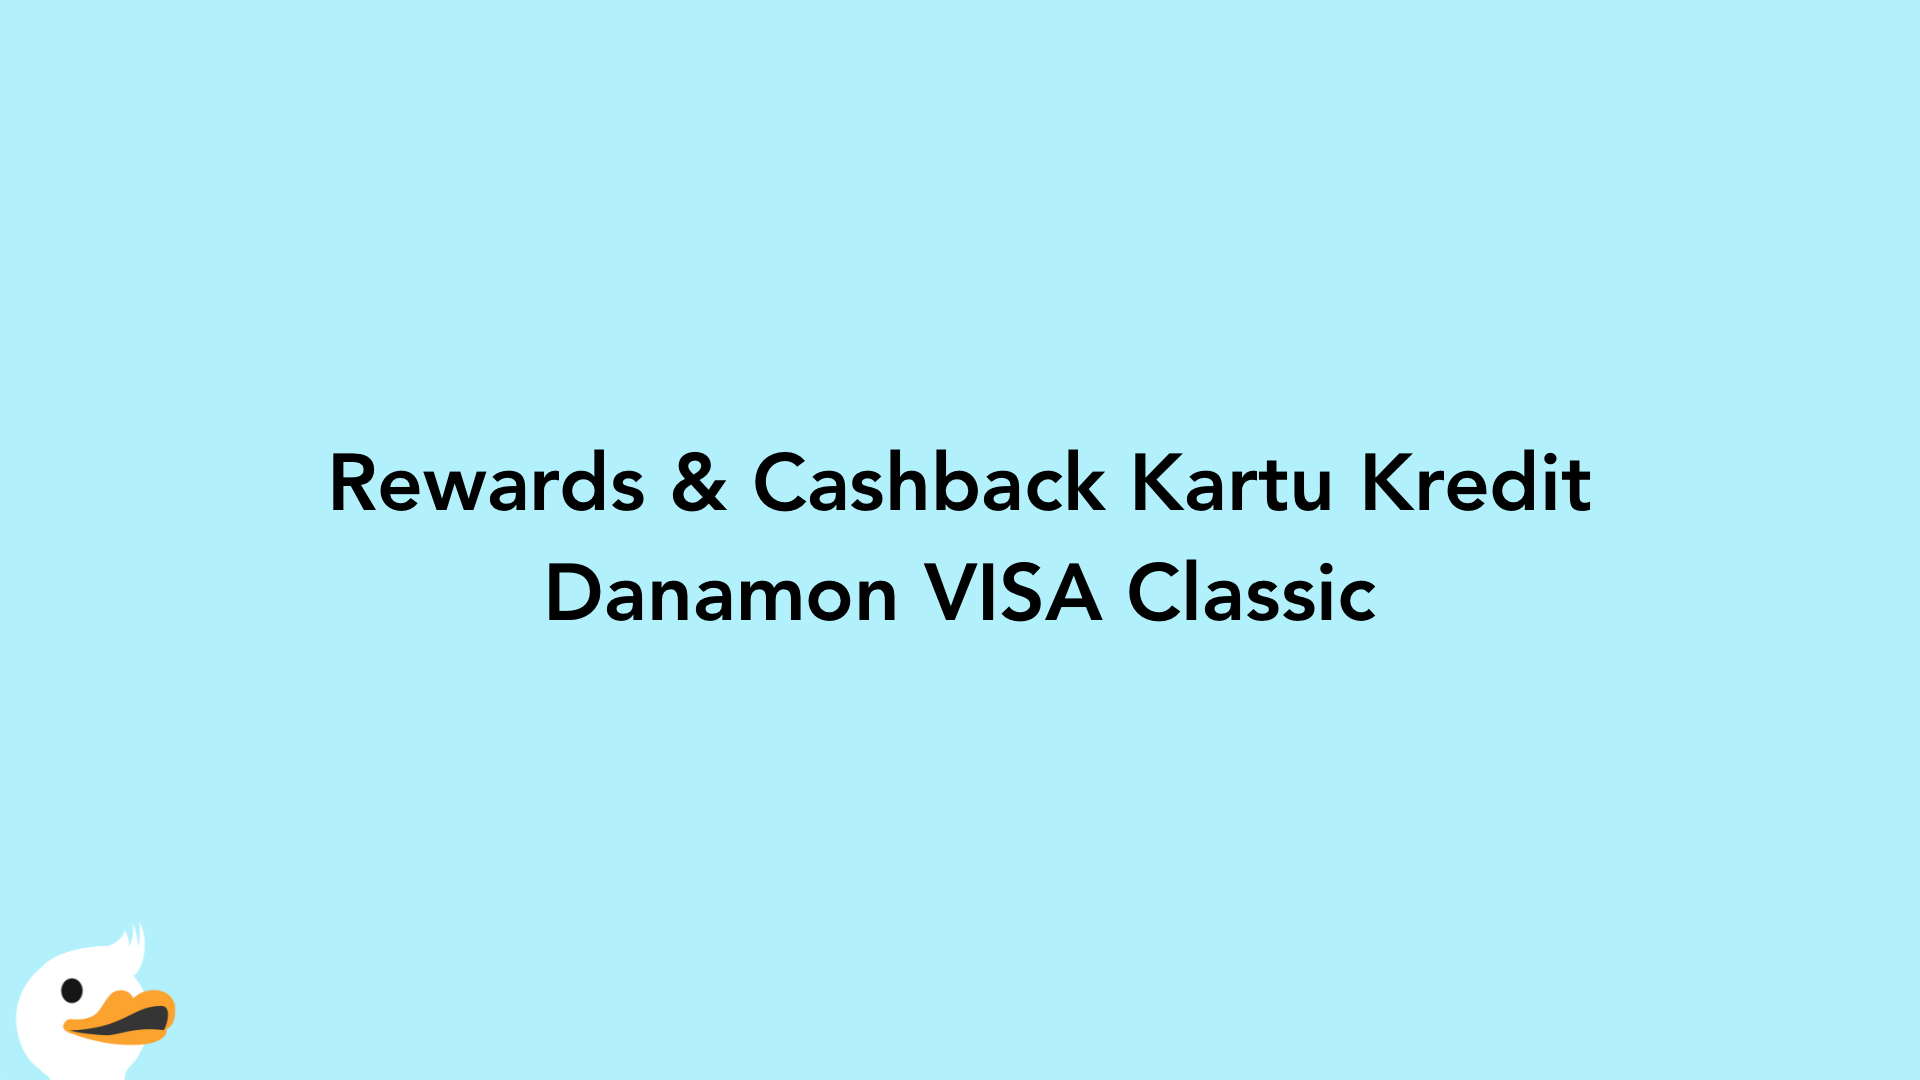 Rewards & Cashback Kartu Kredit Danamon VISA Classic